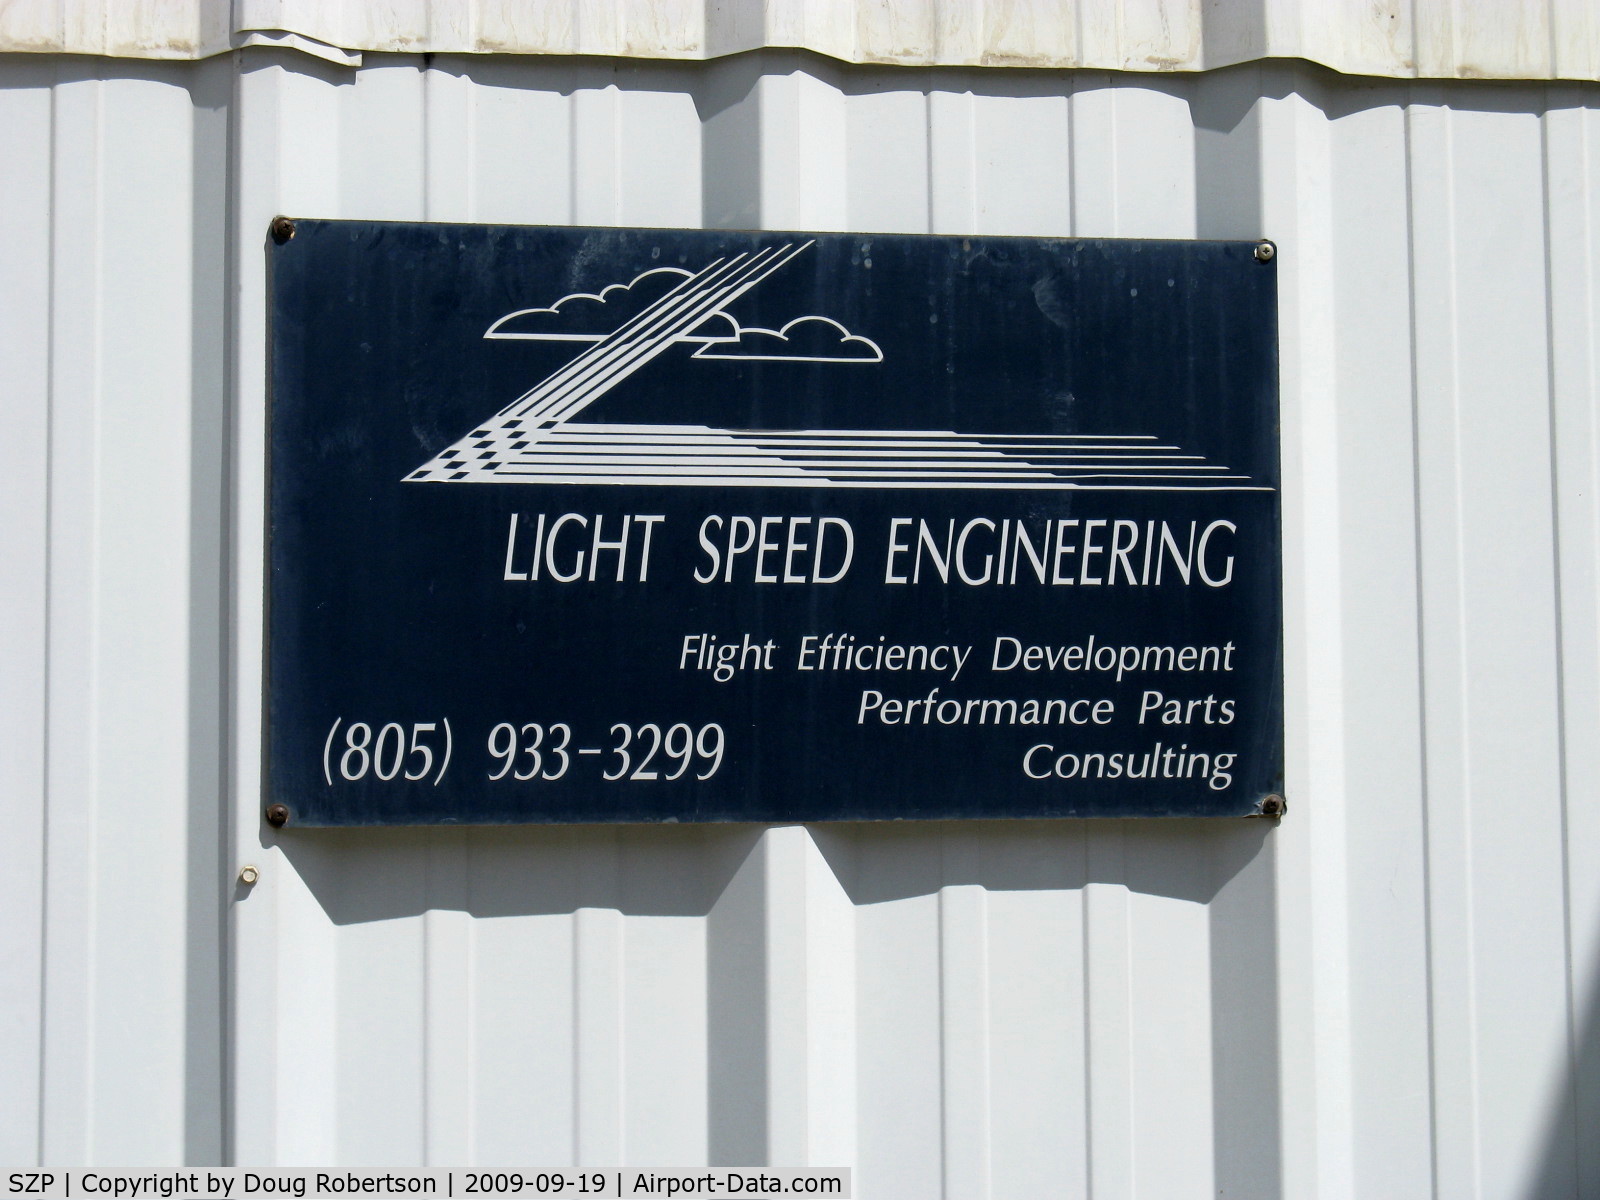 Santa Paula Airport (SZP) - Klaus Savier's Light Speed Engineering-Home of N57LG, Holder of multiple Federation Aeronautique Internationale World Records.